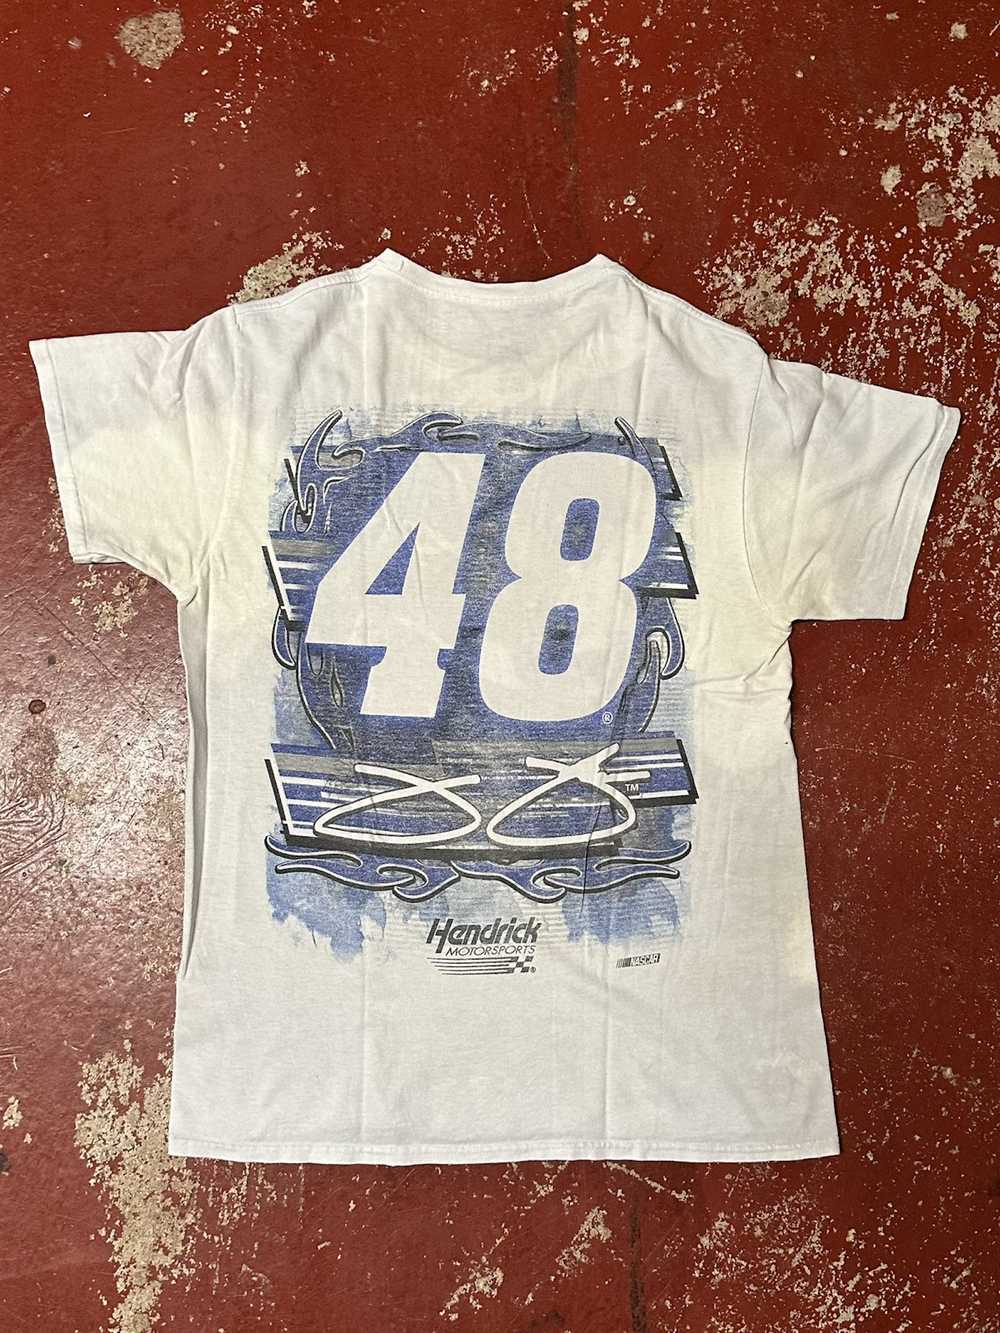 NASCAR jimmie johnson nascar t-shirt - image 2